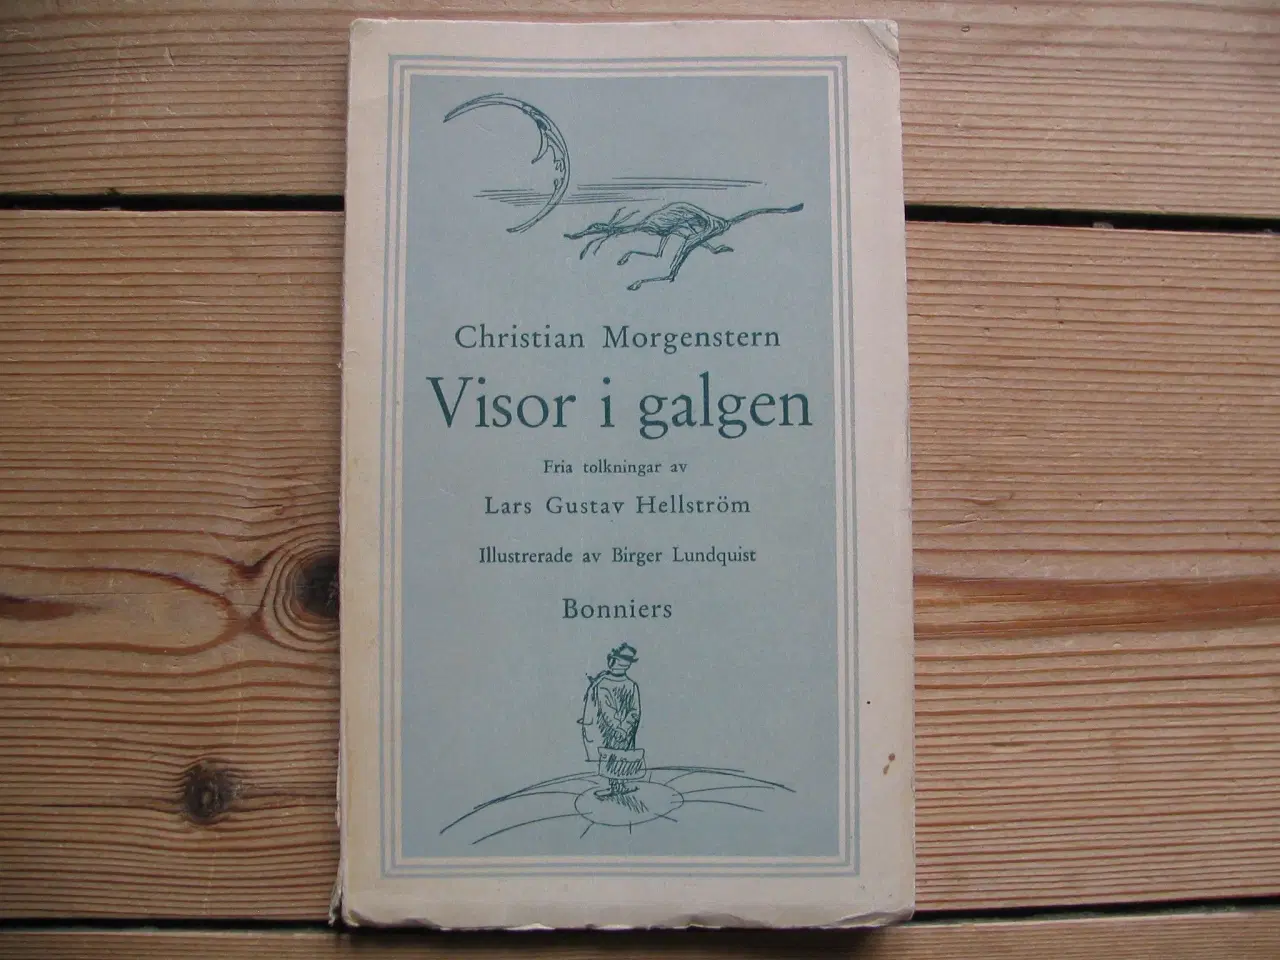 Billede 1 - Christian Morgenstern (1871-1914). Visor i galgen